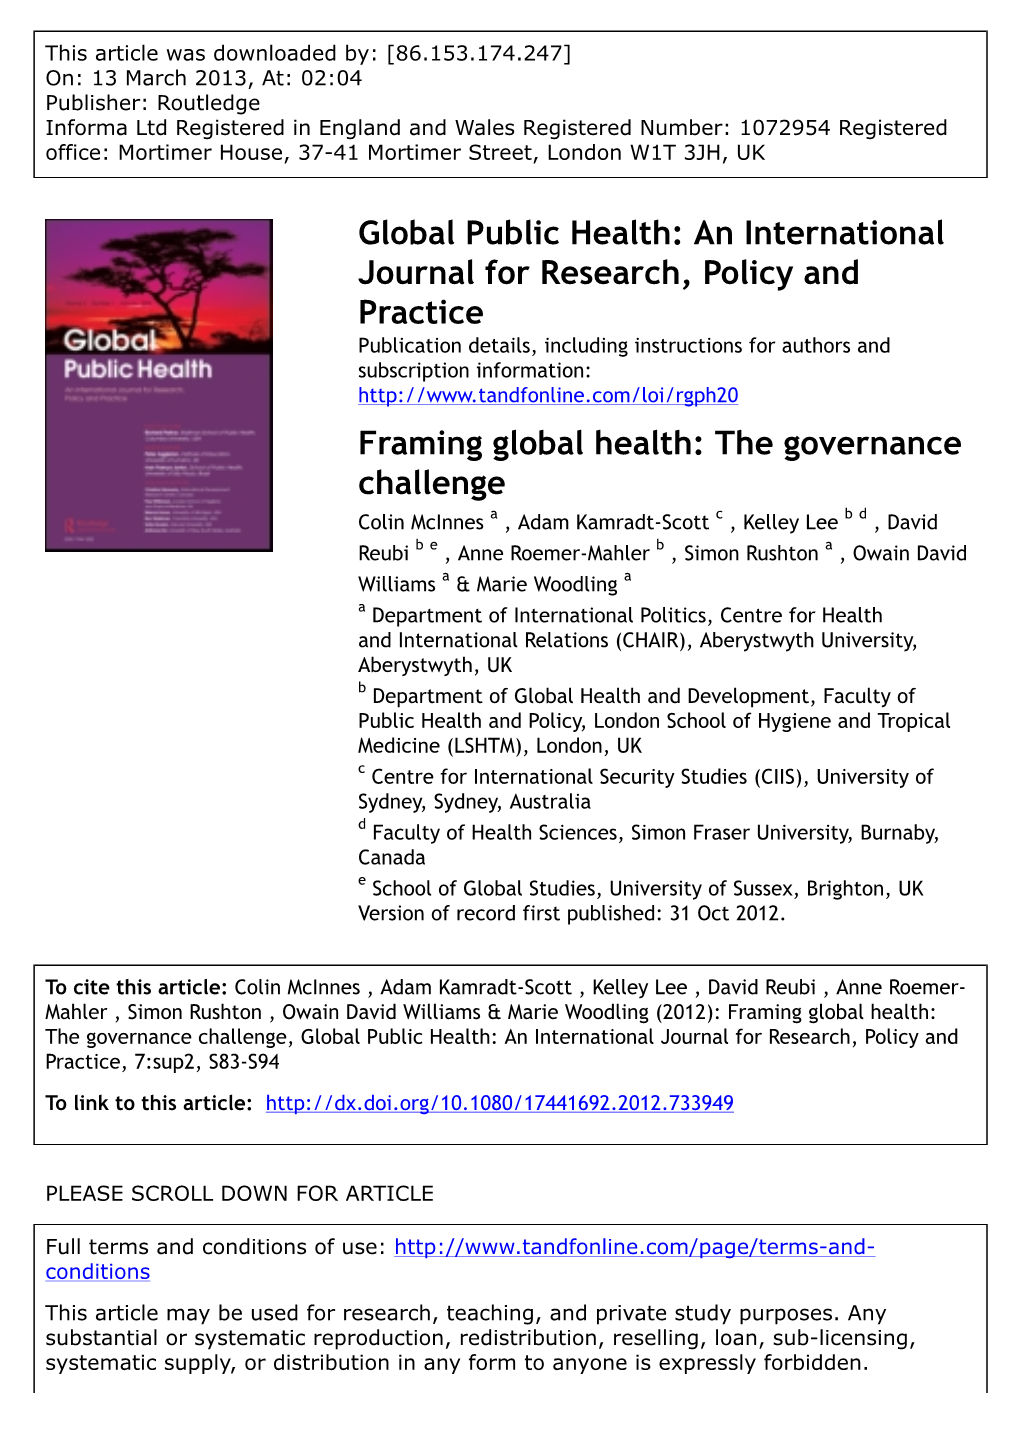 Framing Global Health